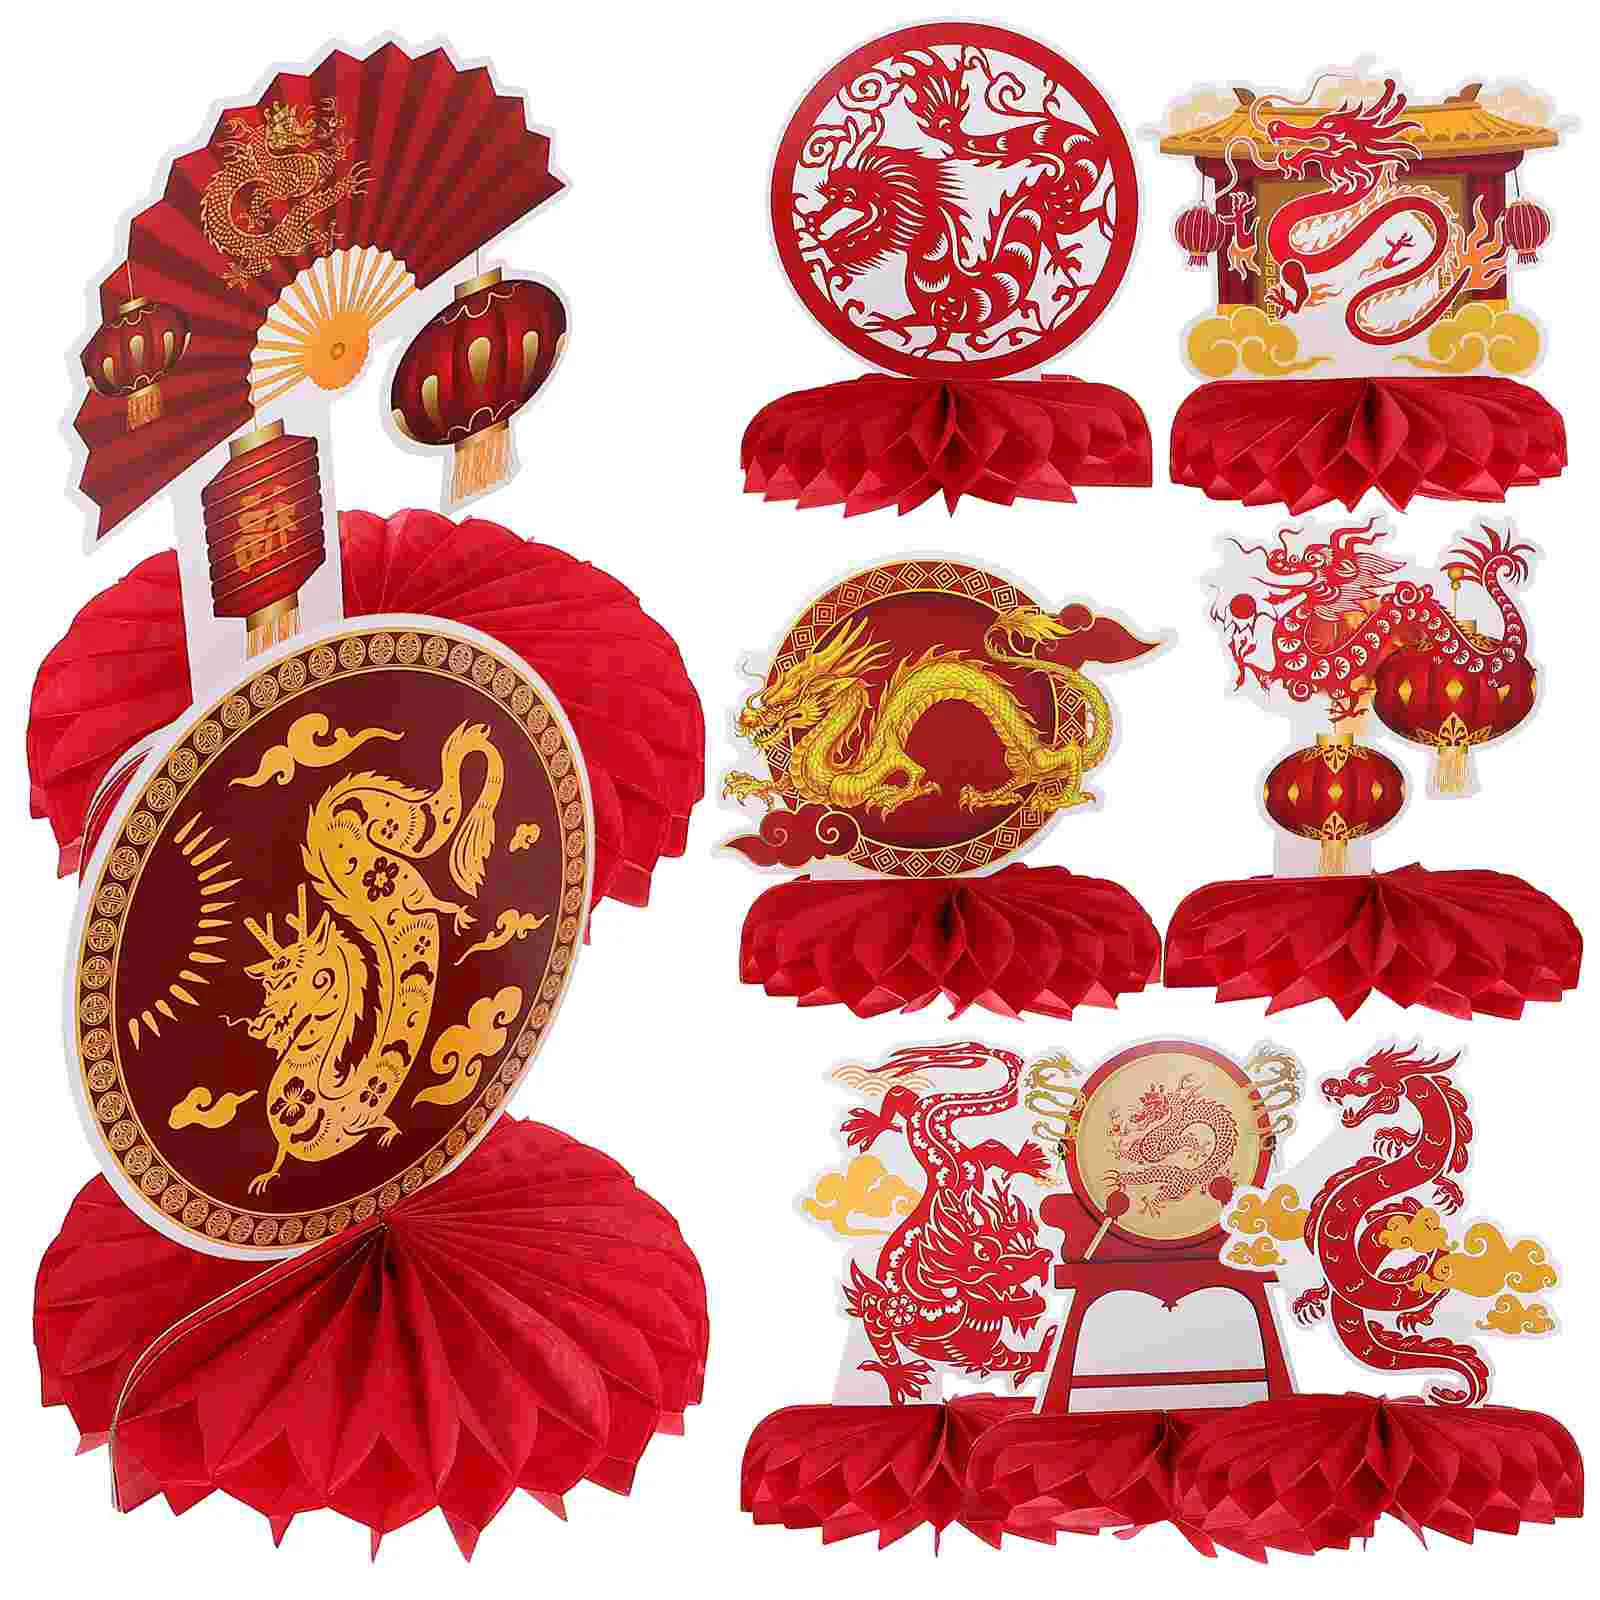 

9 Pcs New Year Desktop Adornment Home Decor Honeycomb Party Spring Festival Decoration Balls Decorative Paper Prop Creative